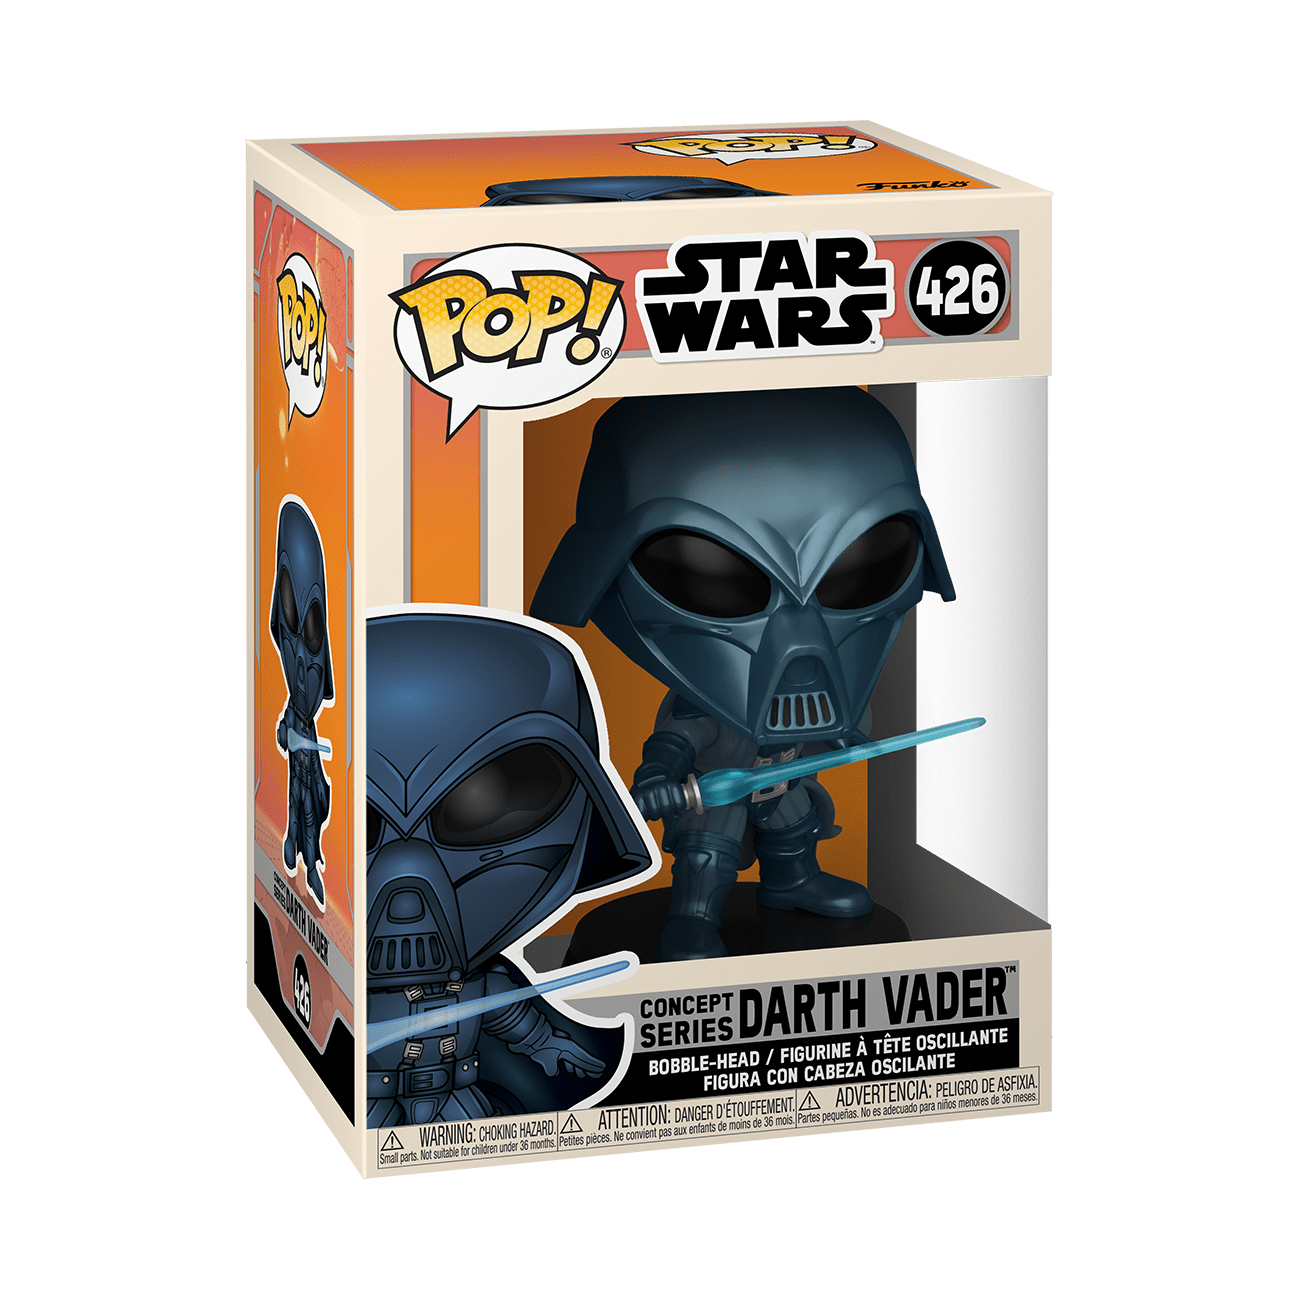 Star Wars 426 Funko Pop Vinyl Concept Series Darth Vader Figure 